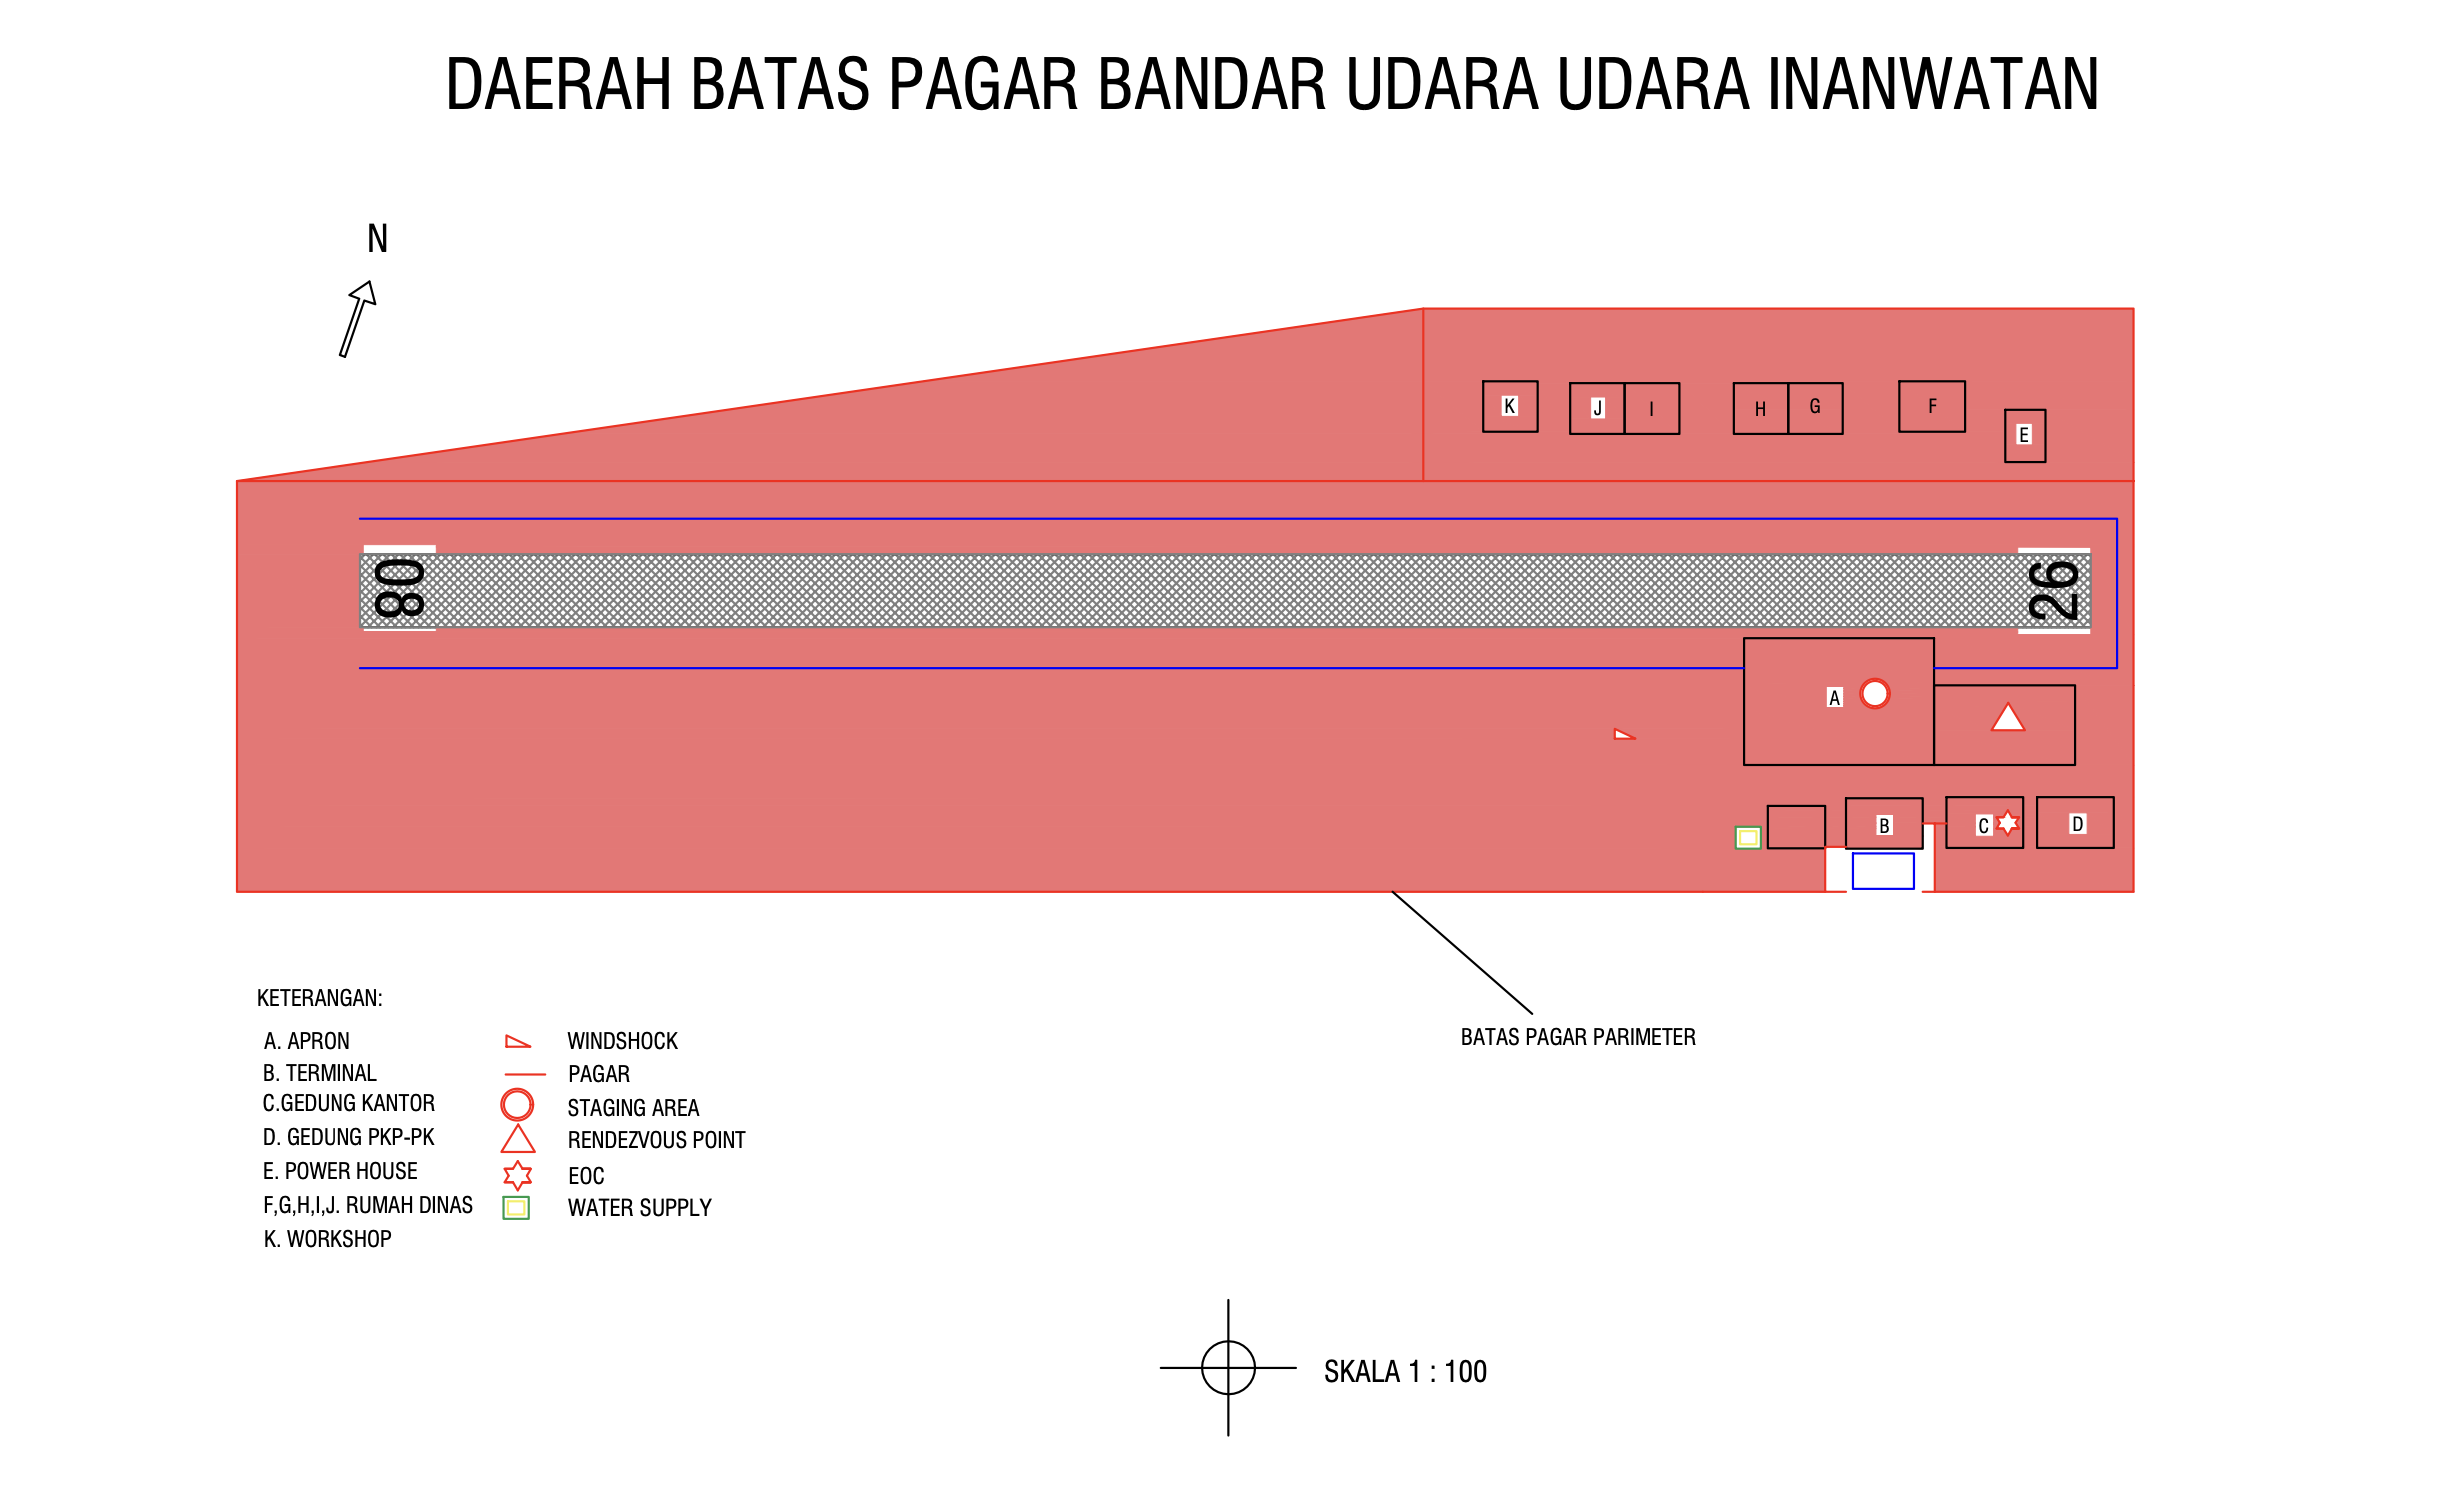 Gambar Peta Bandara Denah Batas Pagar Bandar Udara Inanwatan